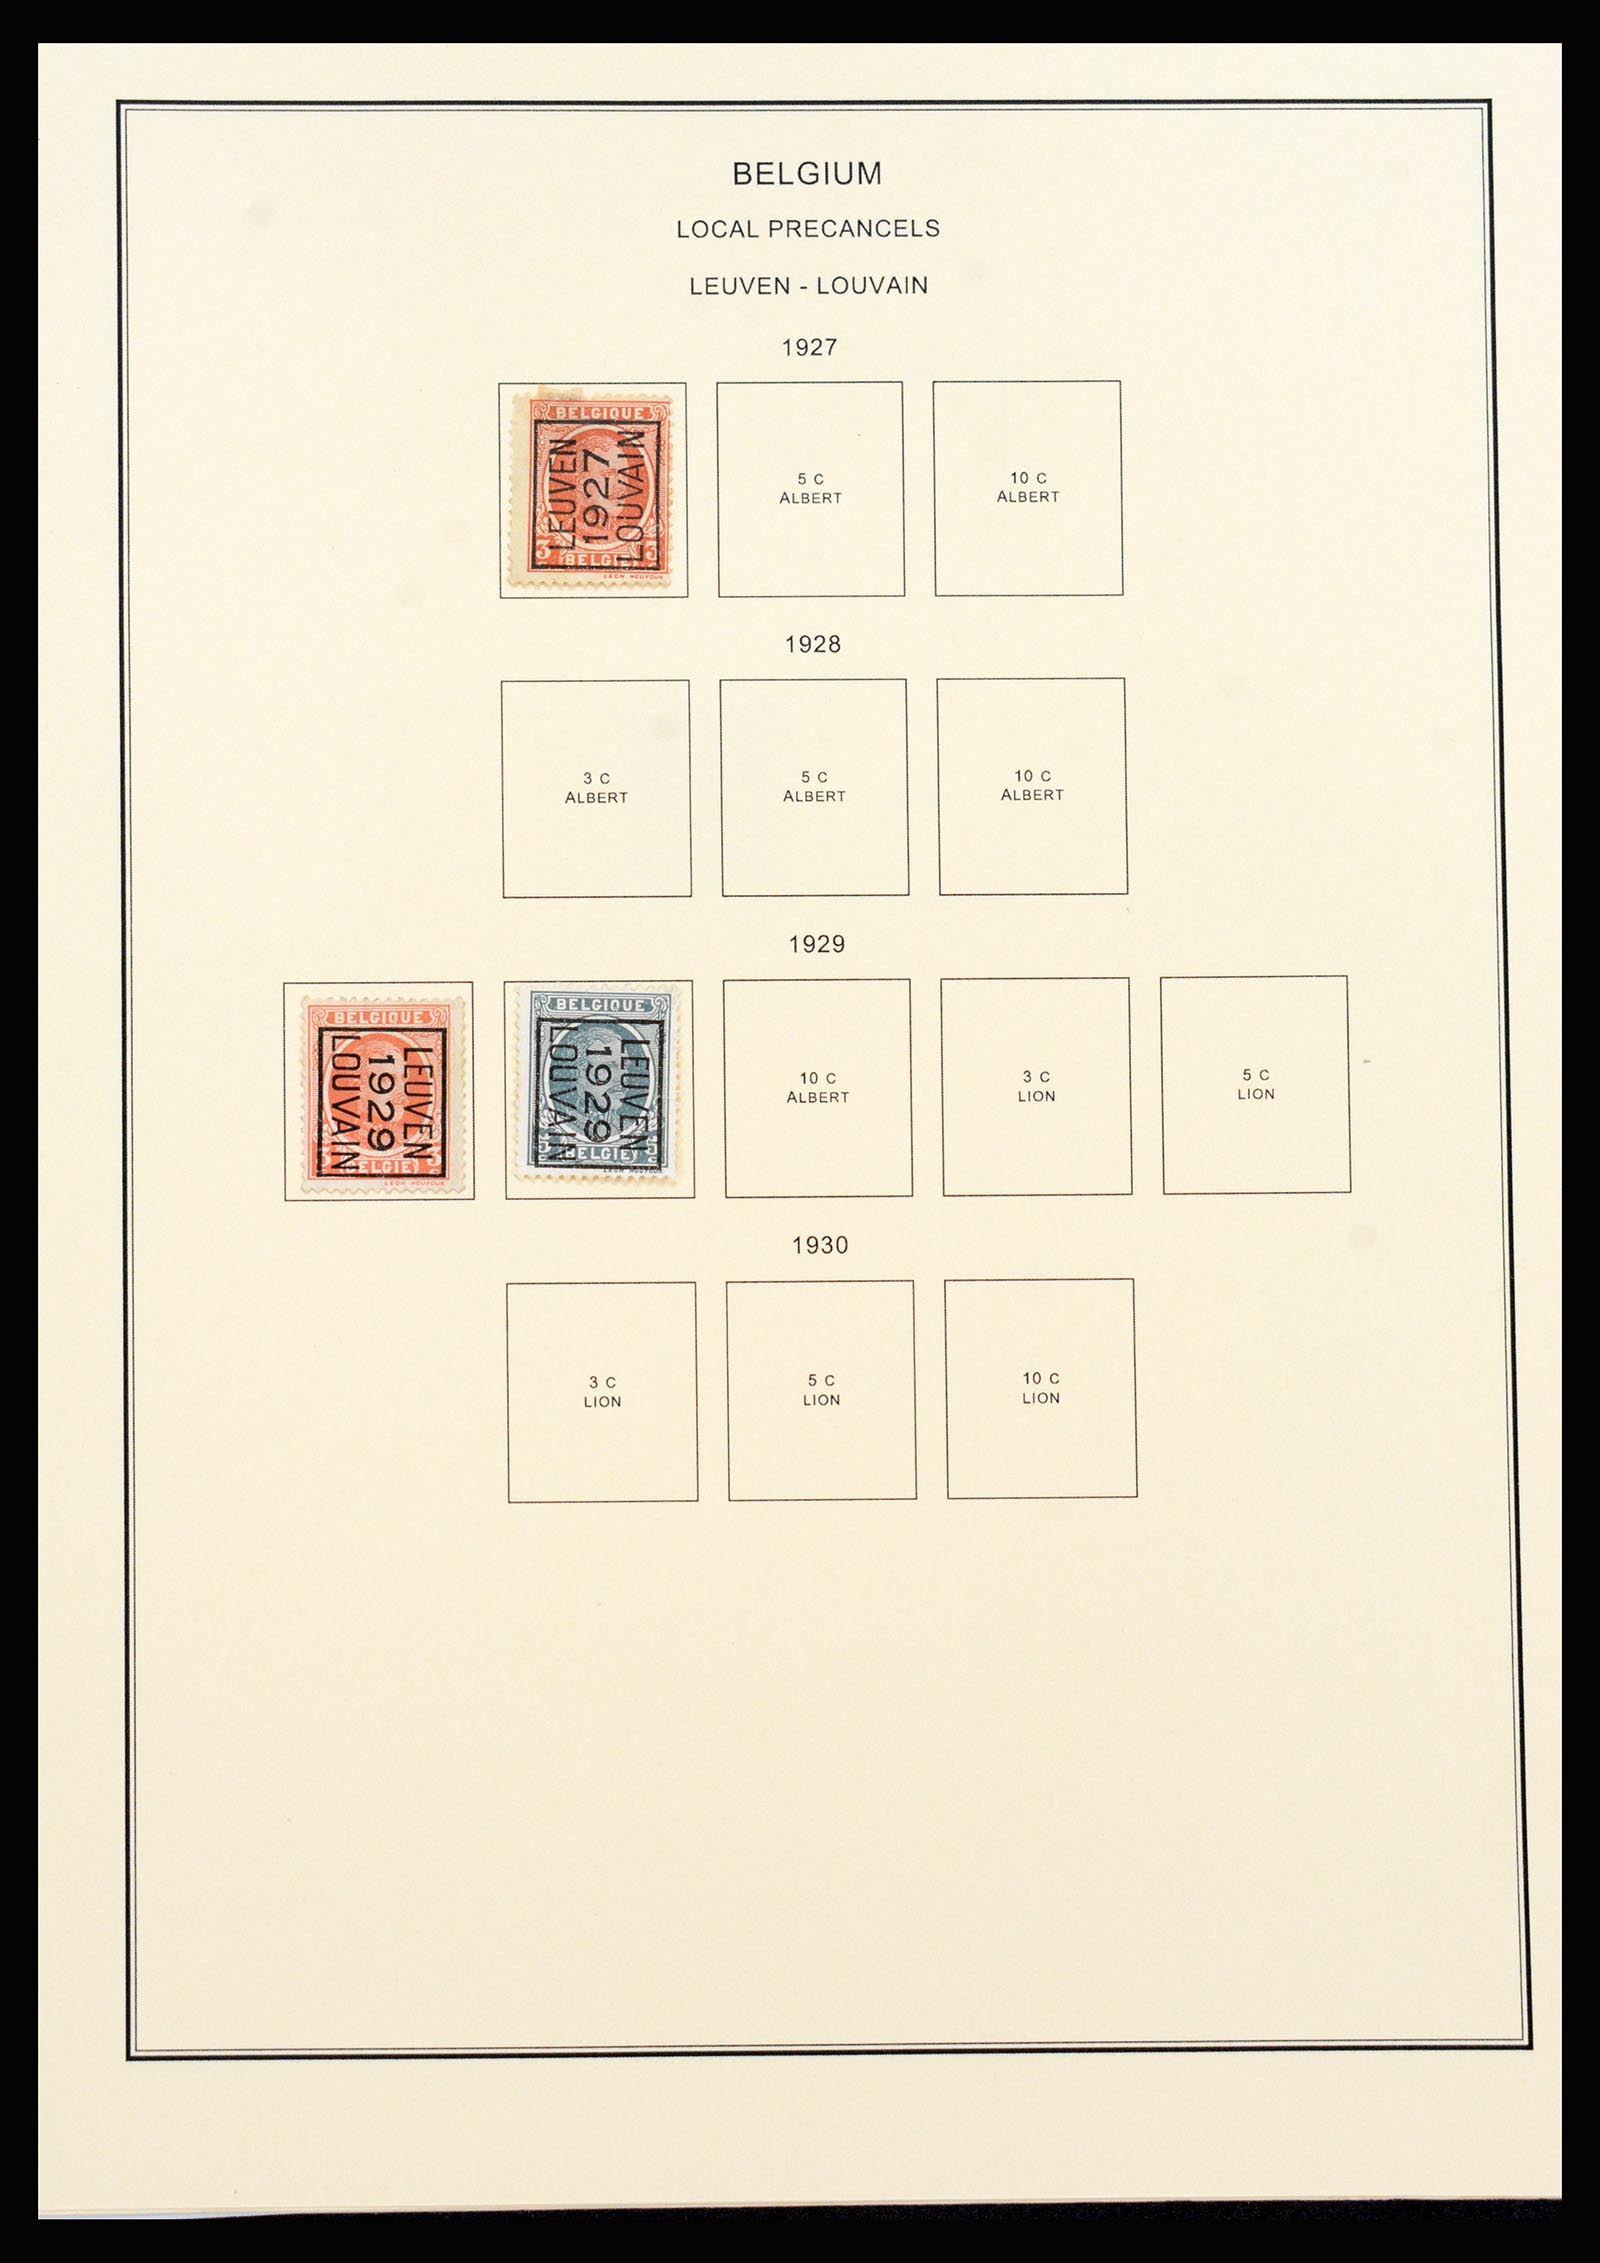 37240 367 - Stamp collection 37240 Belgium 1849-1996.